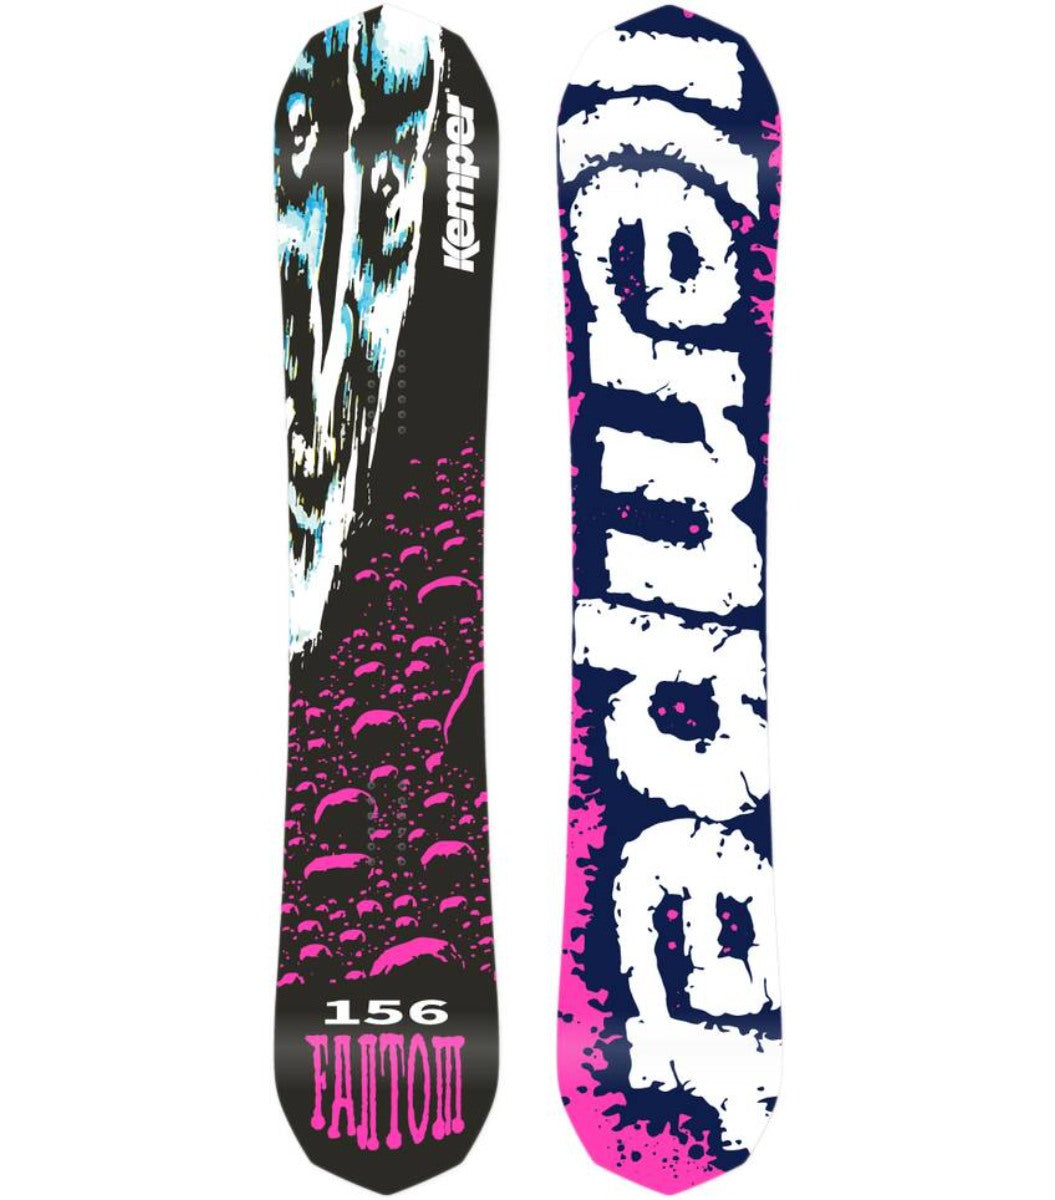 13: Kemper Fantom 1991/92 Sort Snowboard - 163 cm